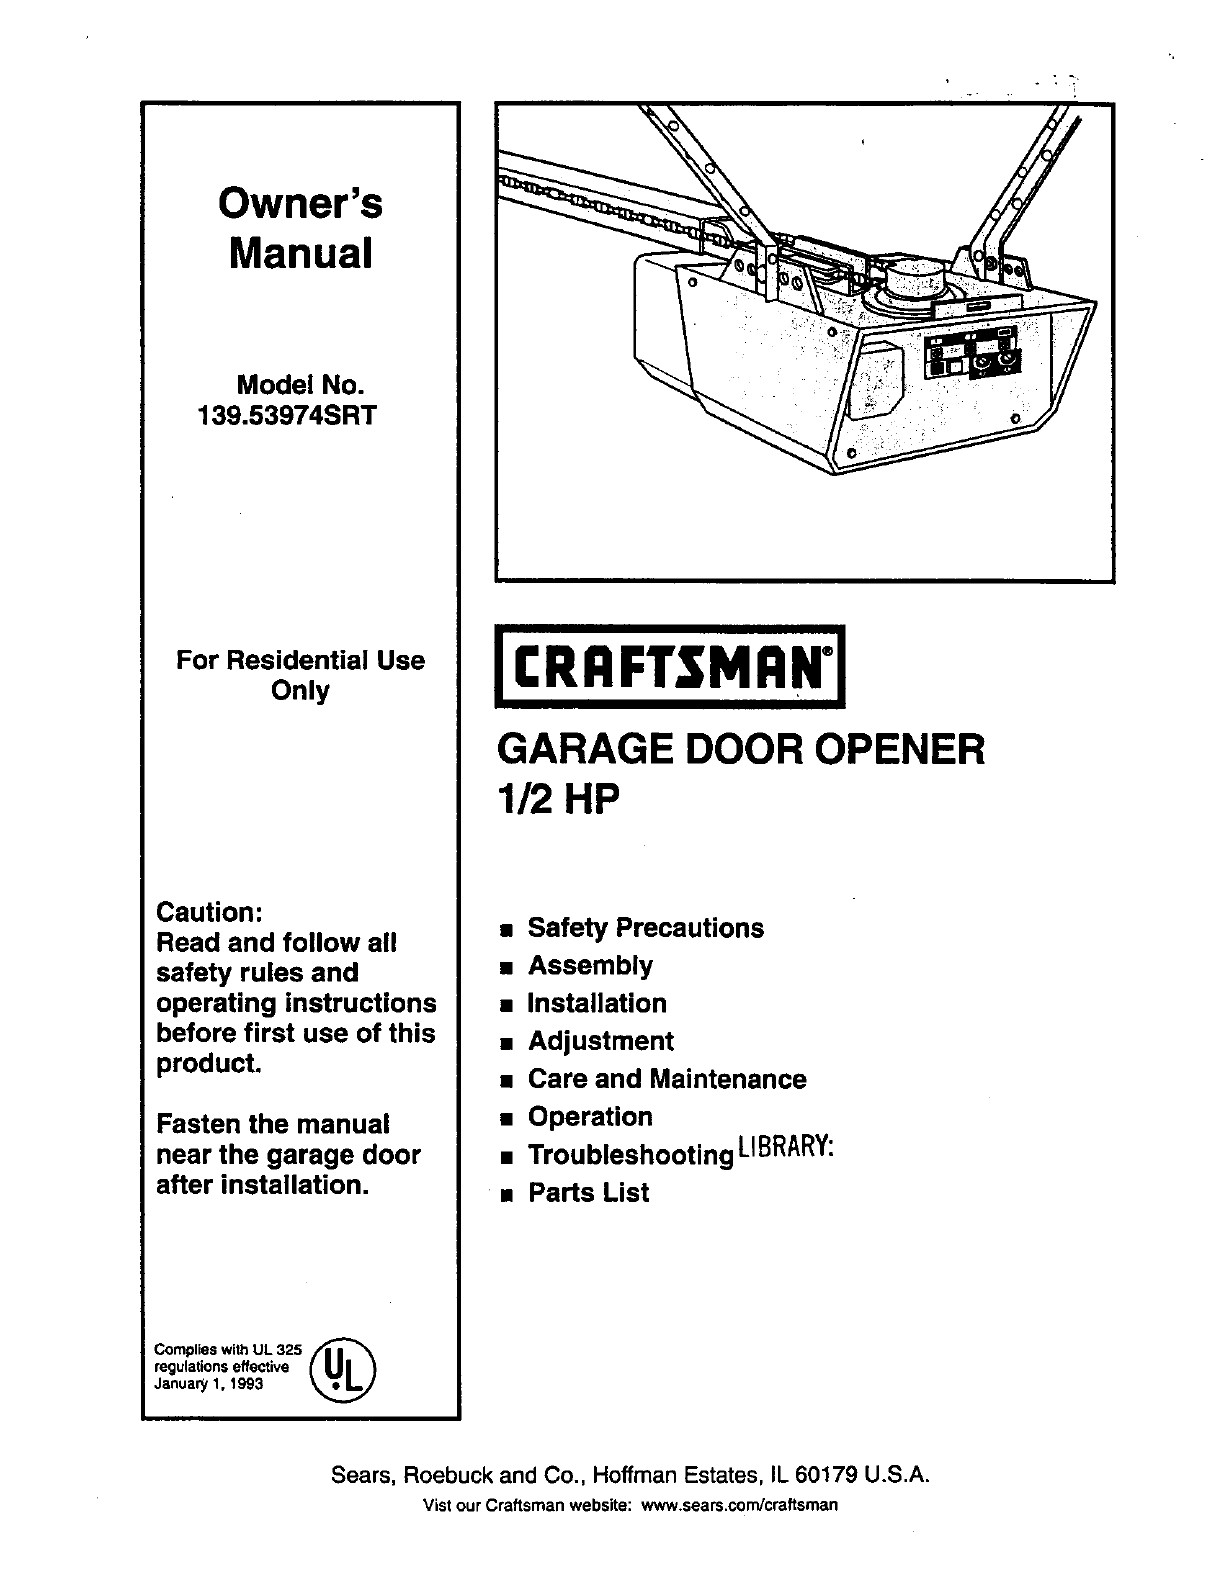 Craftsman Garage Door Opener Manual
 Craftsman garage door opener manual 41a5021